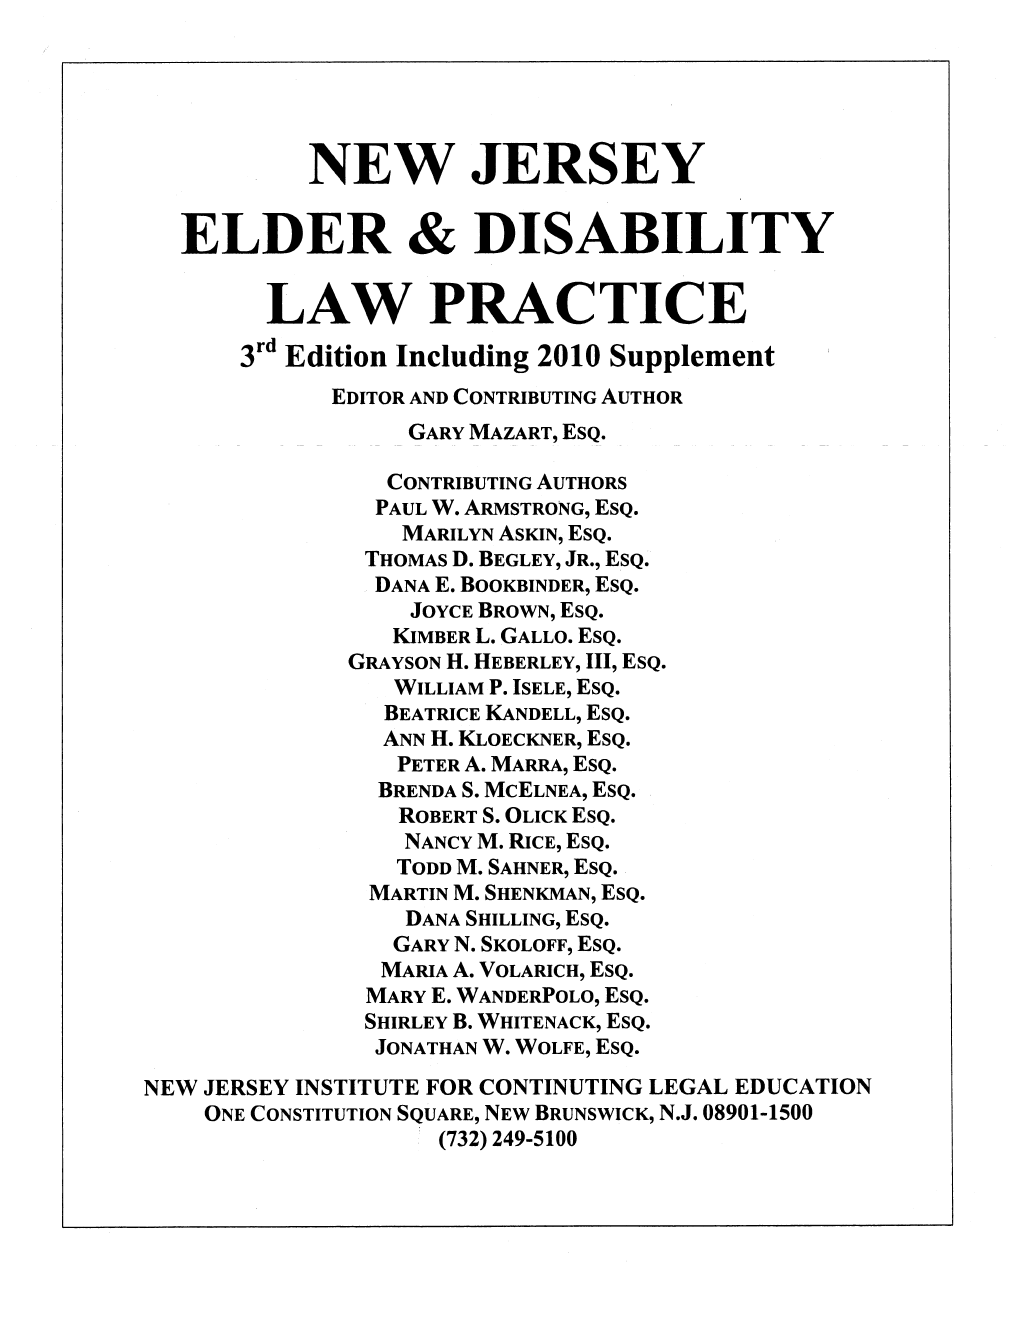 Grandparent Visitation, New Jersey Elder & Disability Law Practice